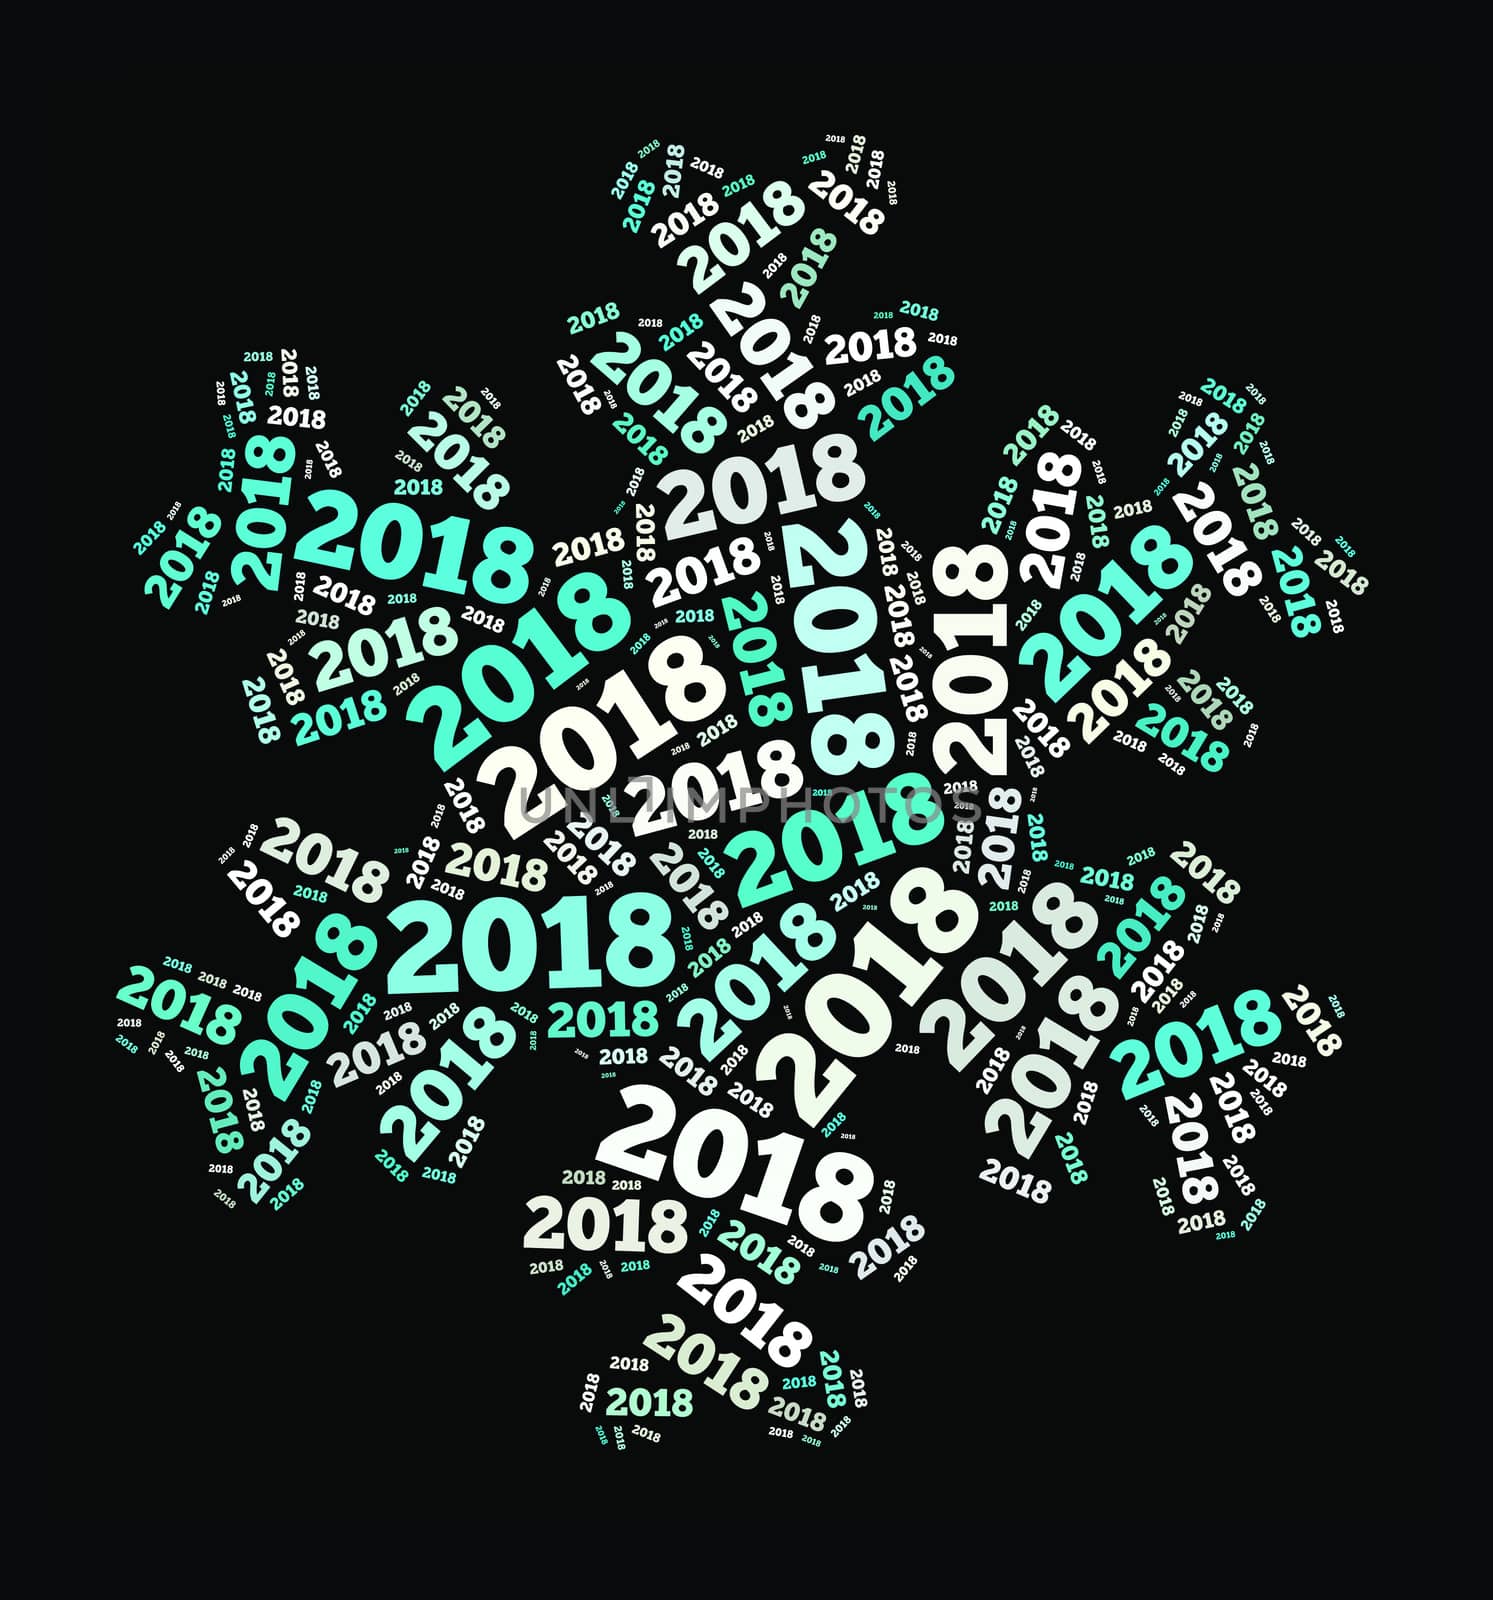 2018 word cloud concept over dark background